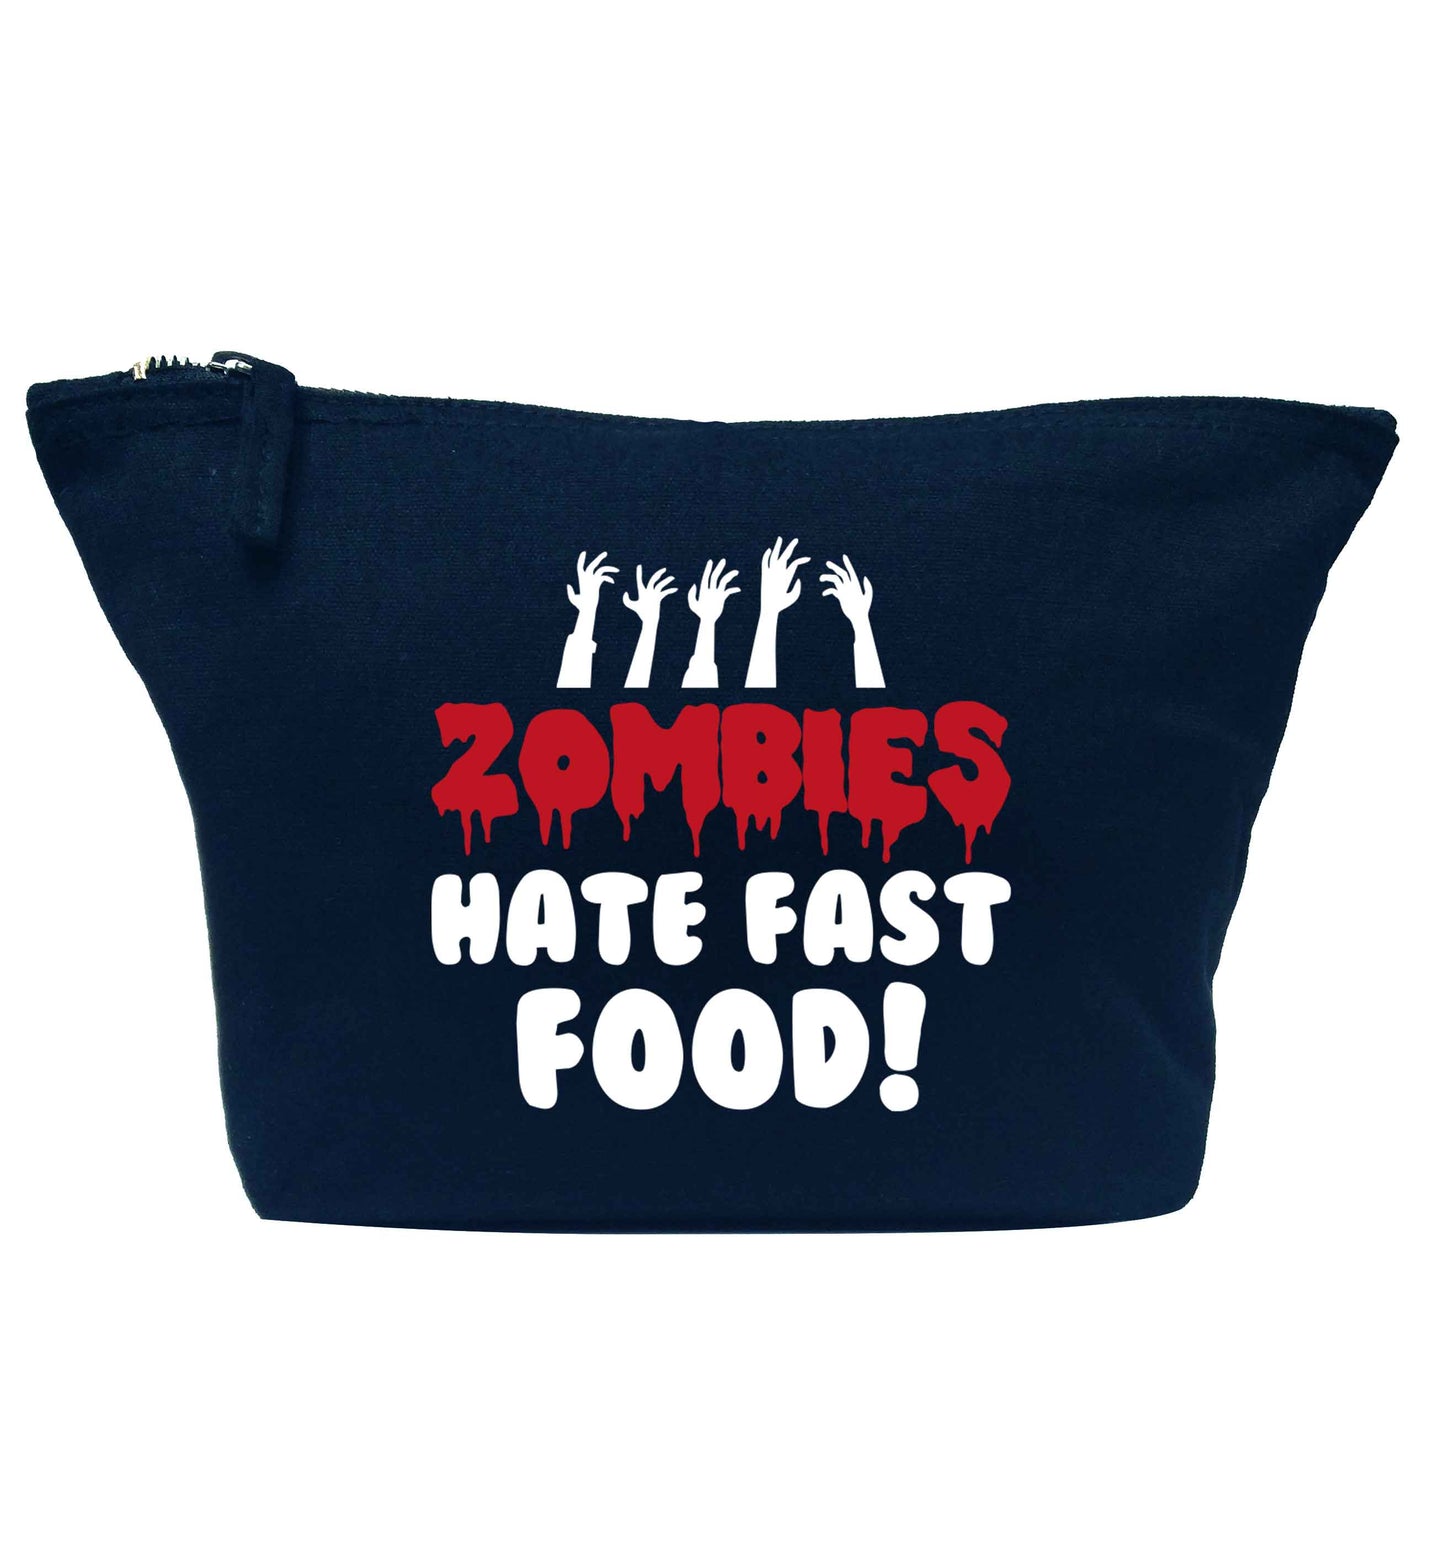 Zombies hate fast food navy makeup bag